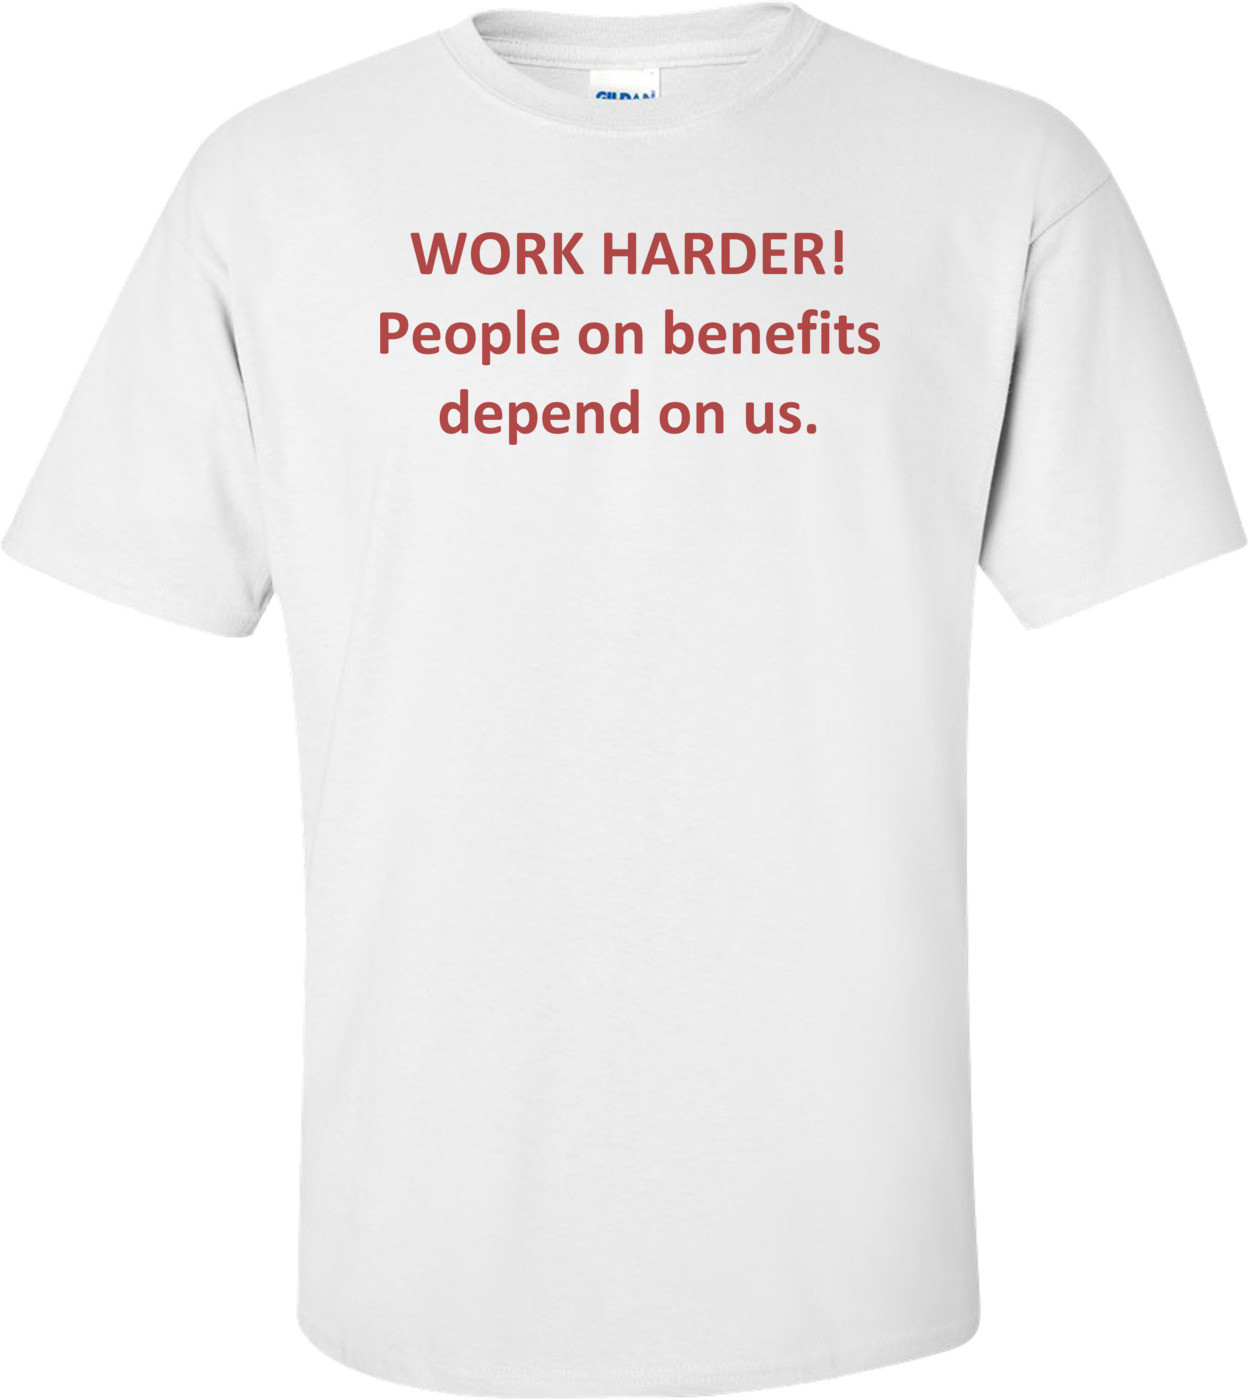 WORK HARDER! People on benefits depend on us.